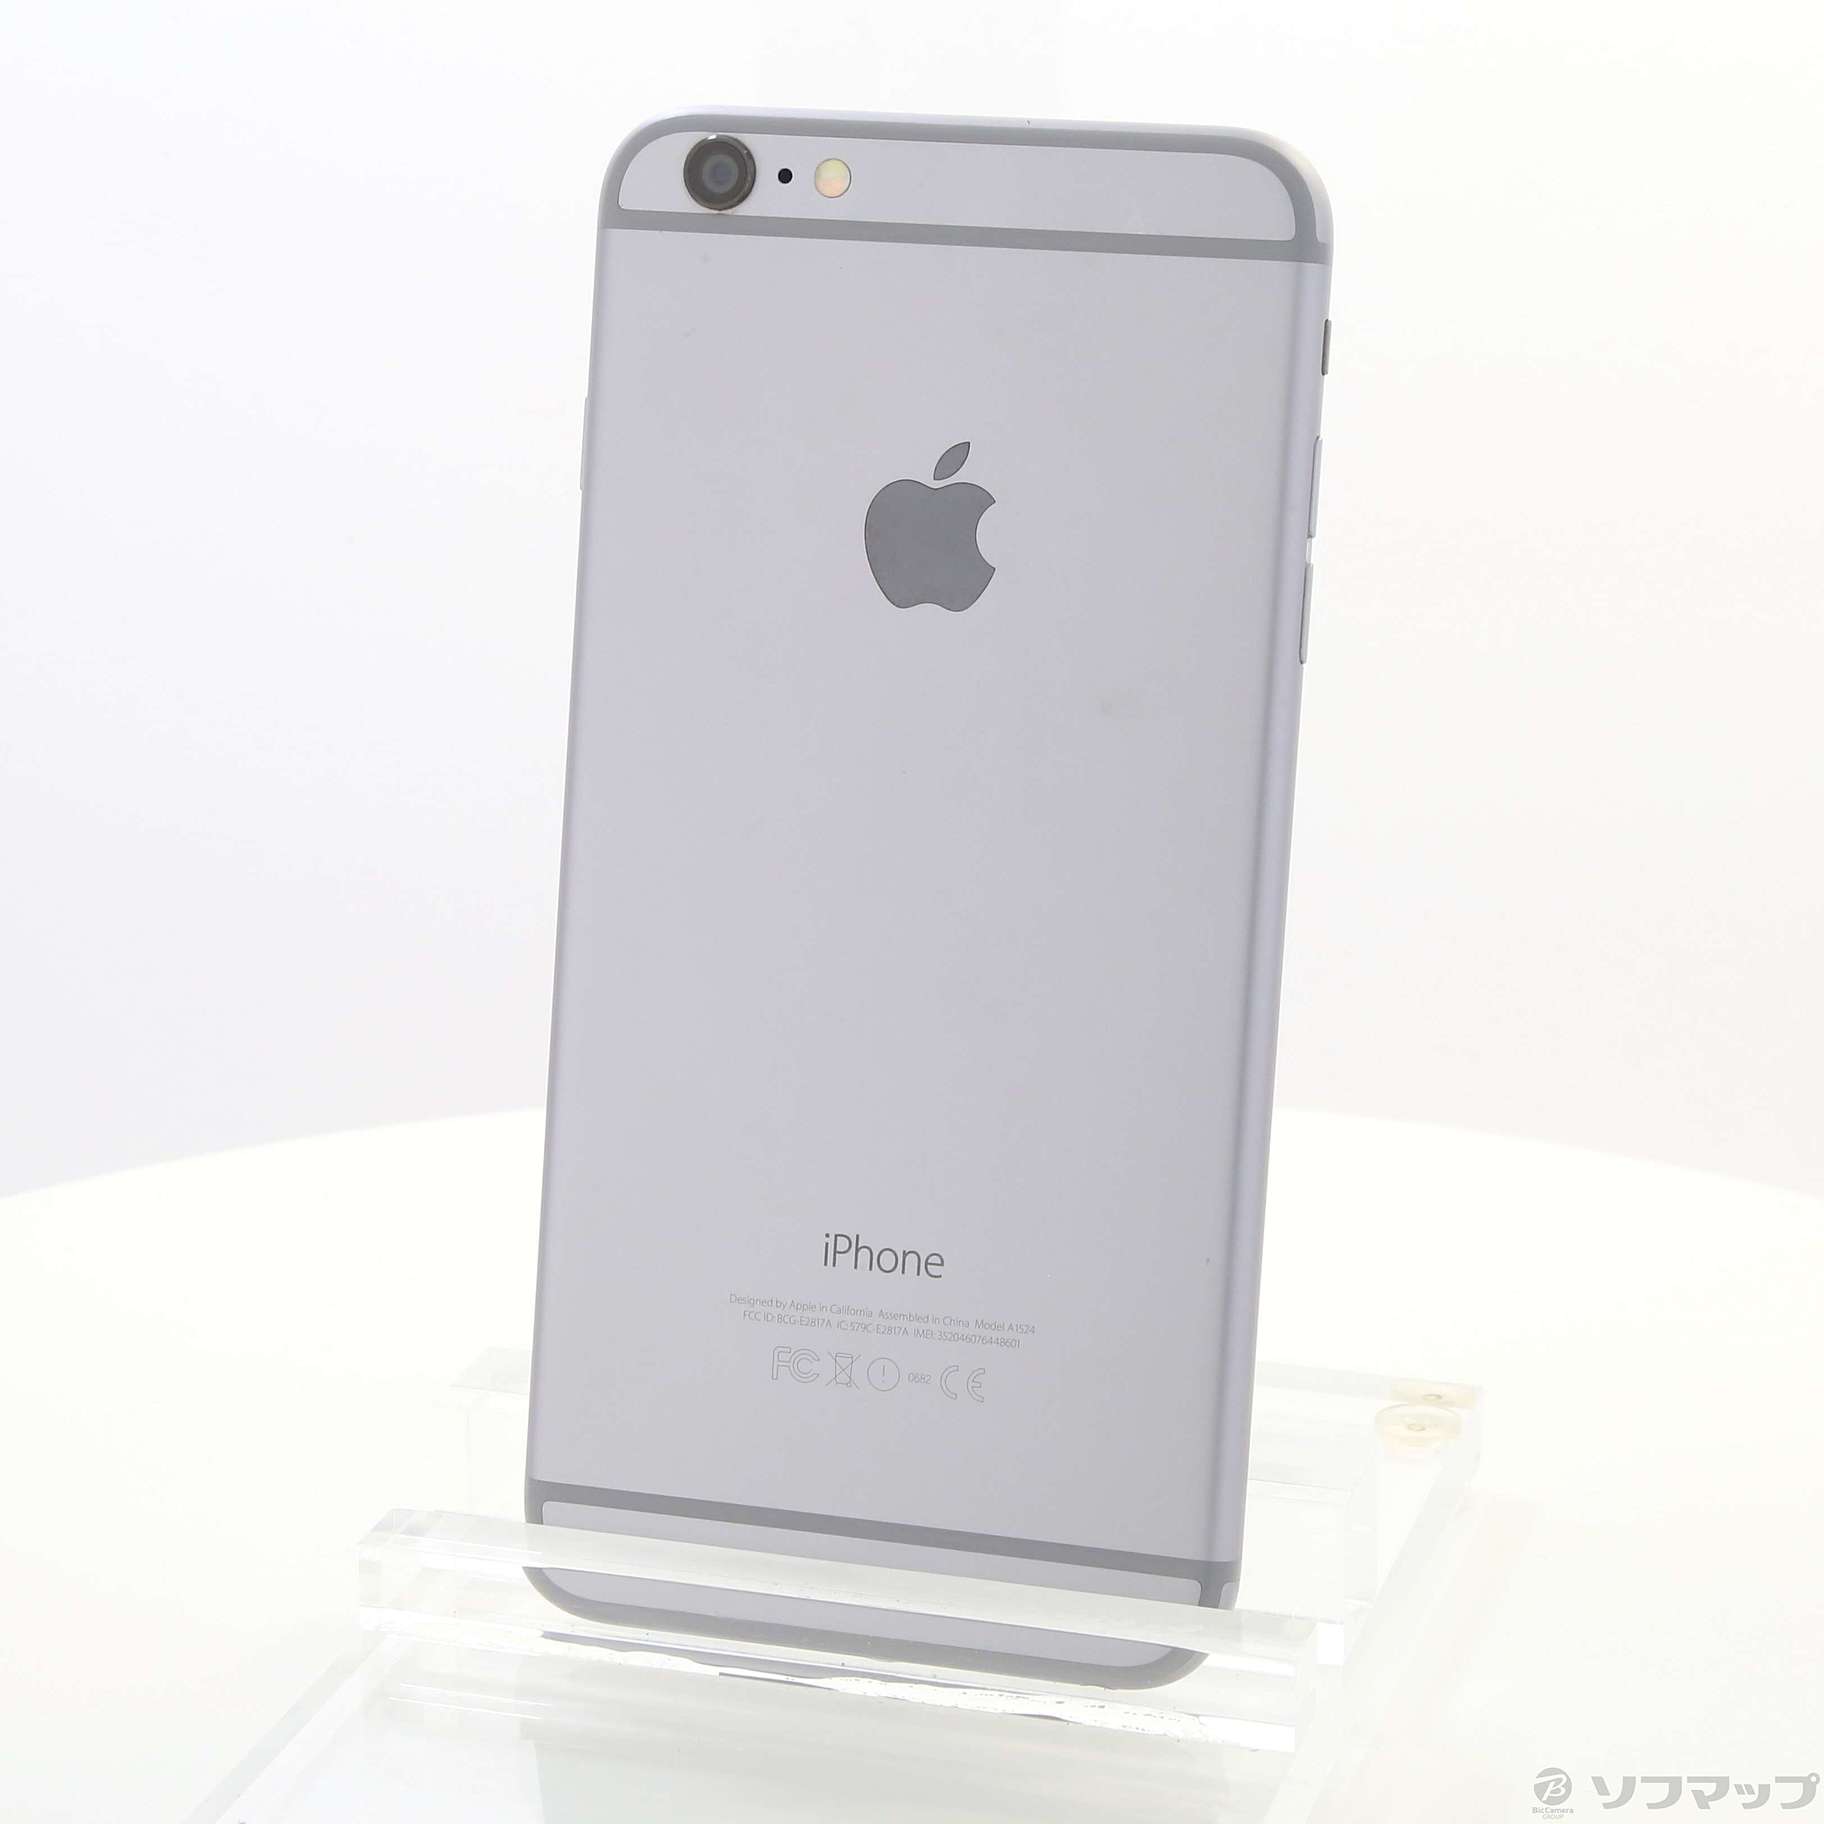 iPhone 6 Space Gray 16 GB Softbank-